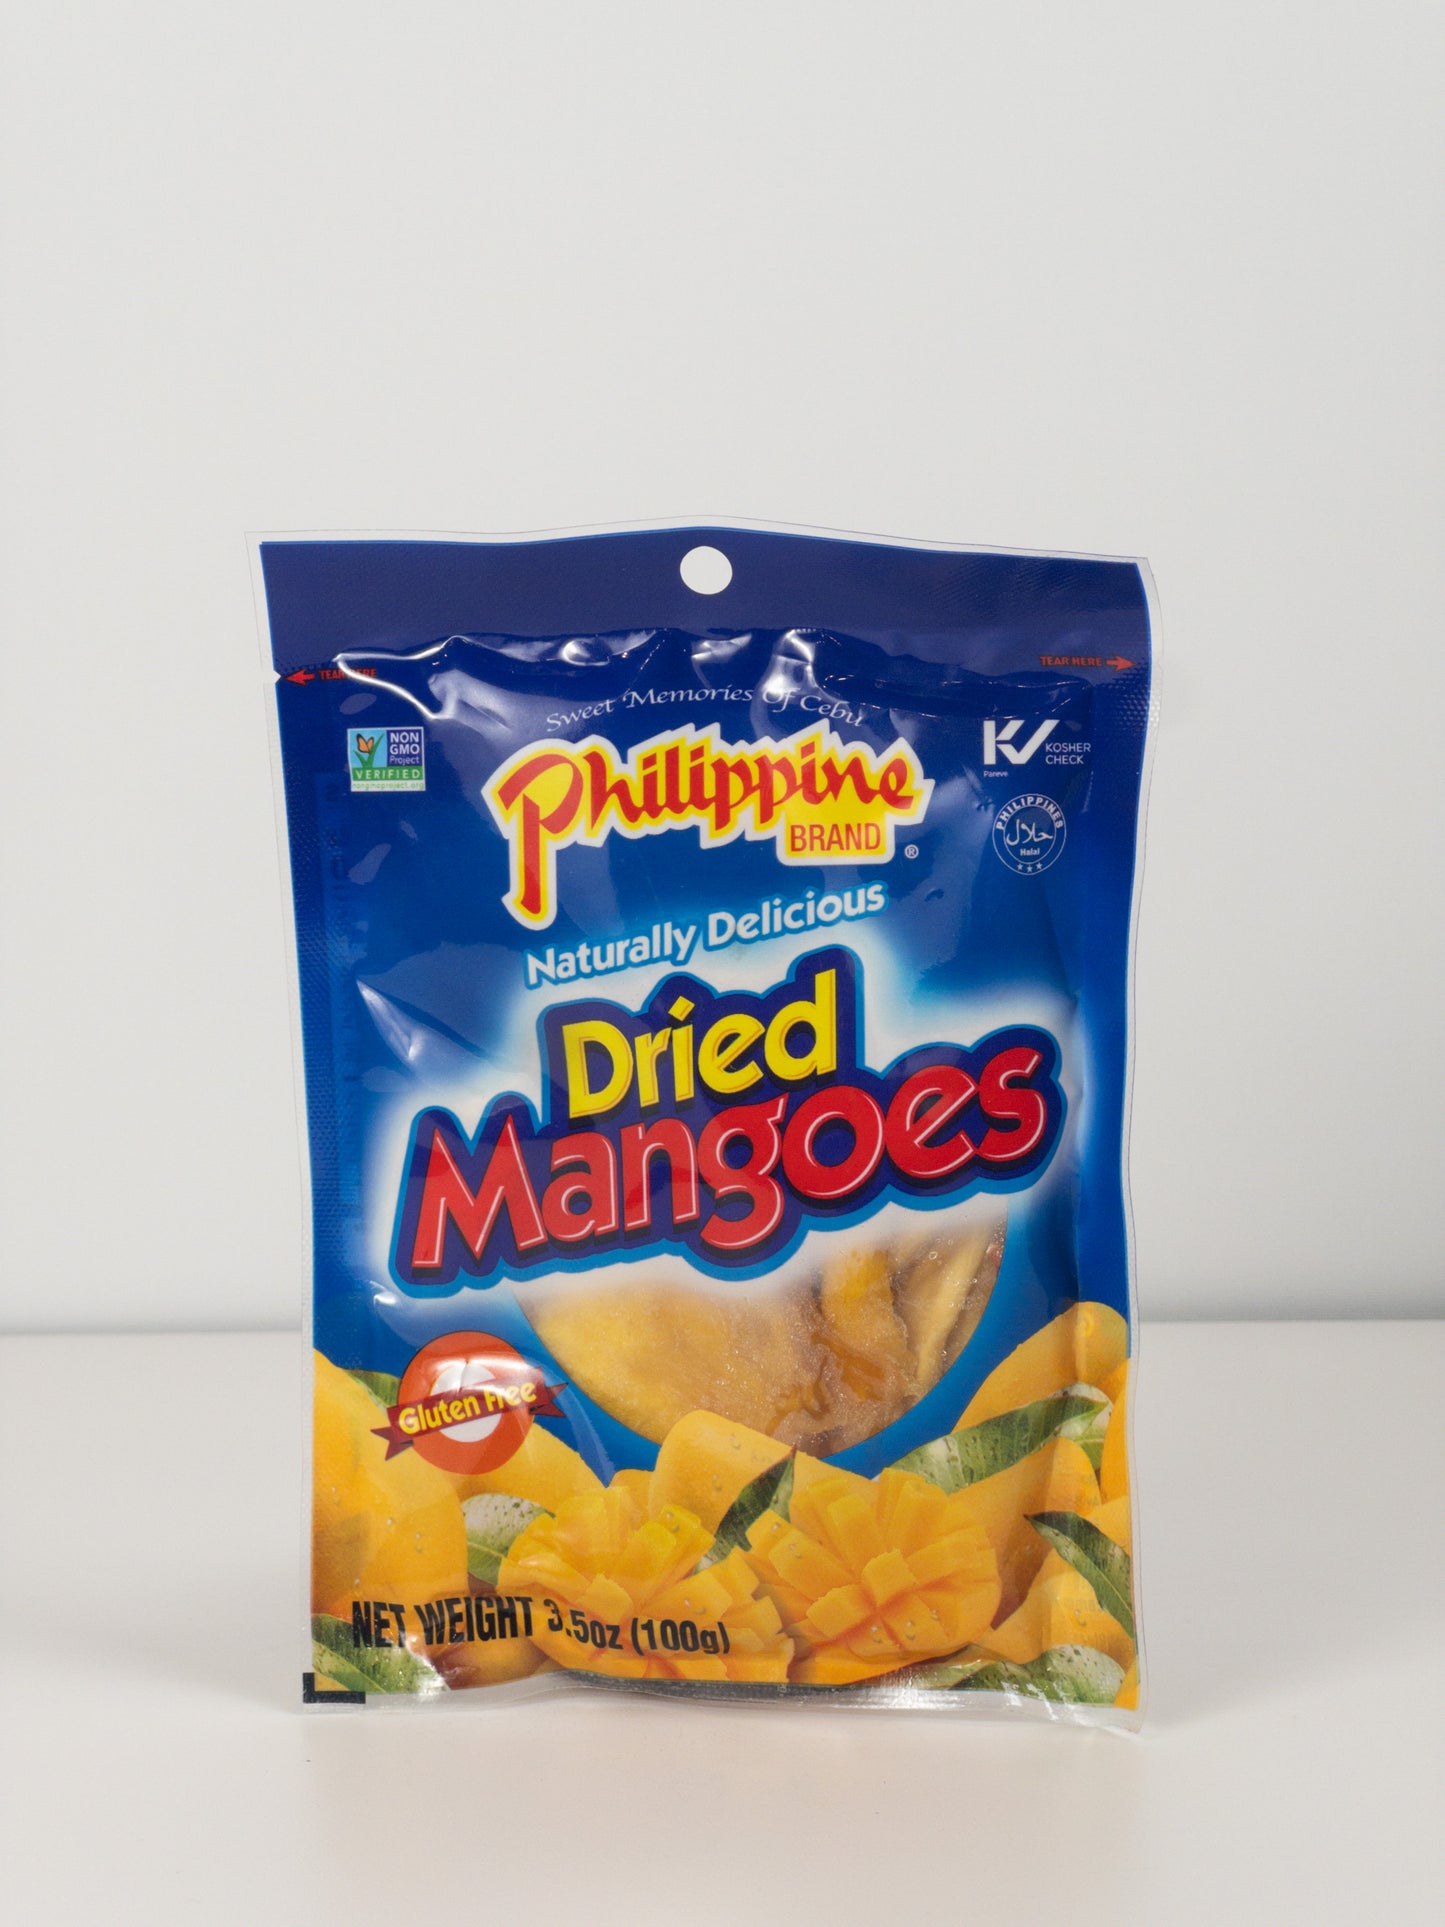 Philippine Brand - Dried Mangoes